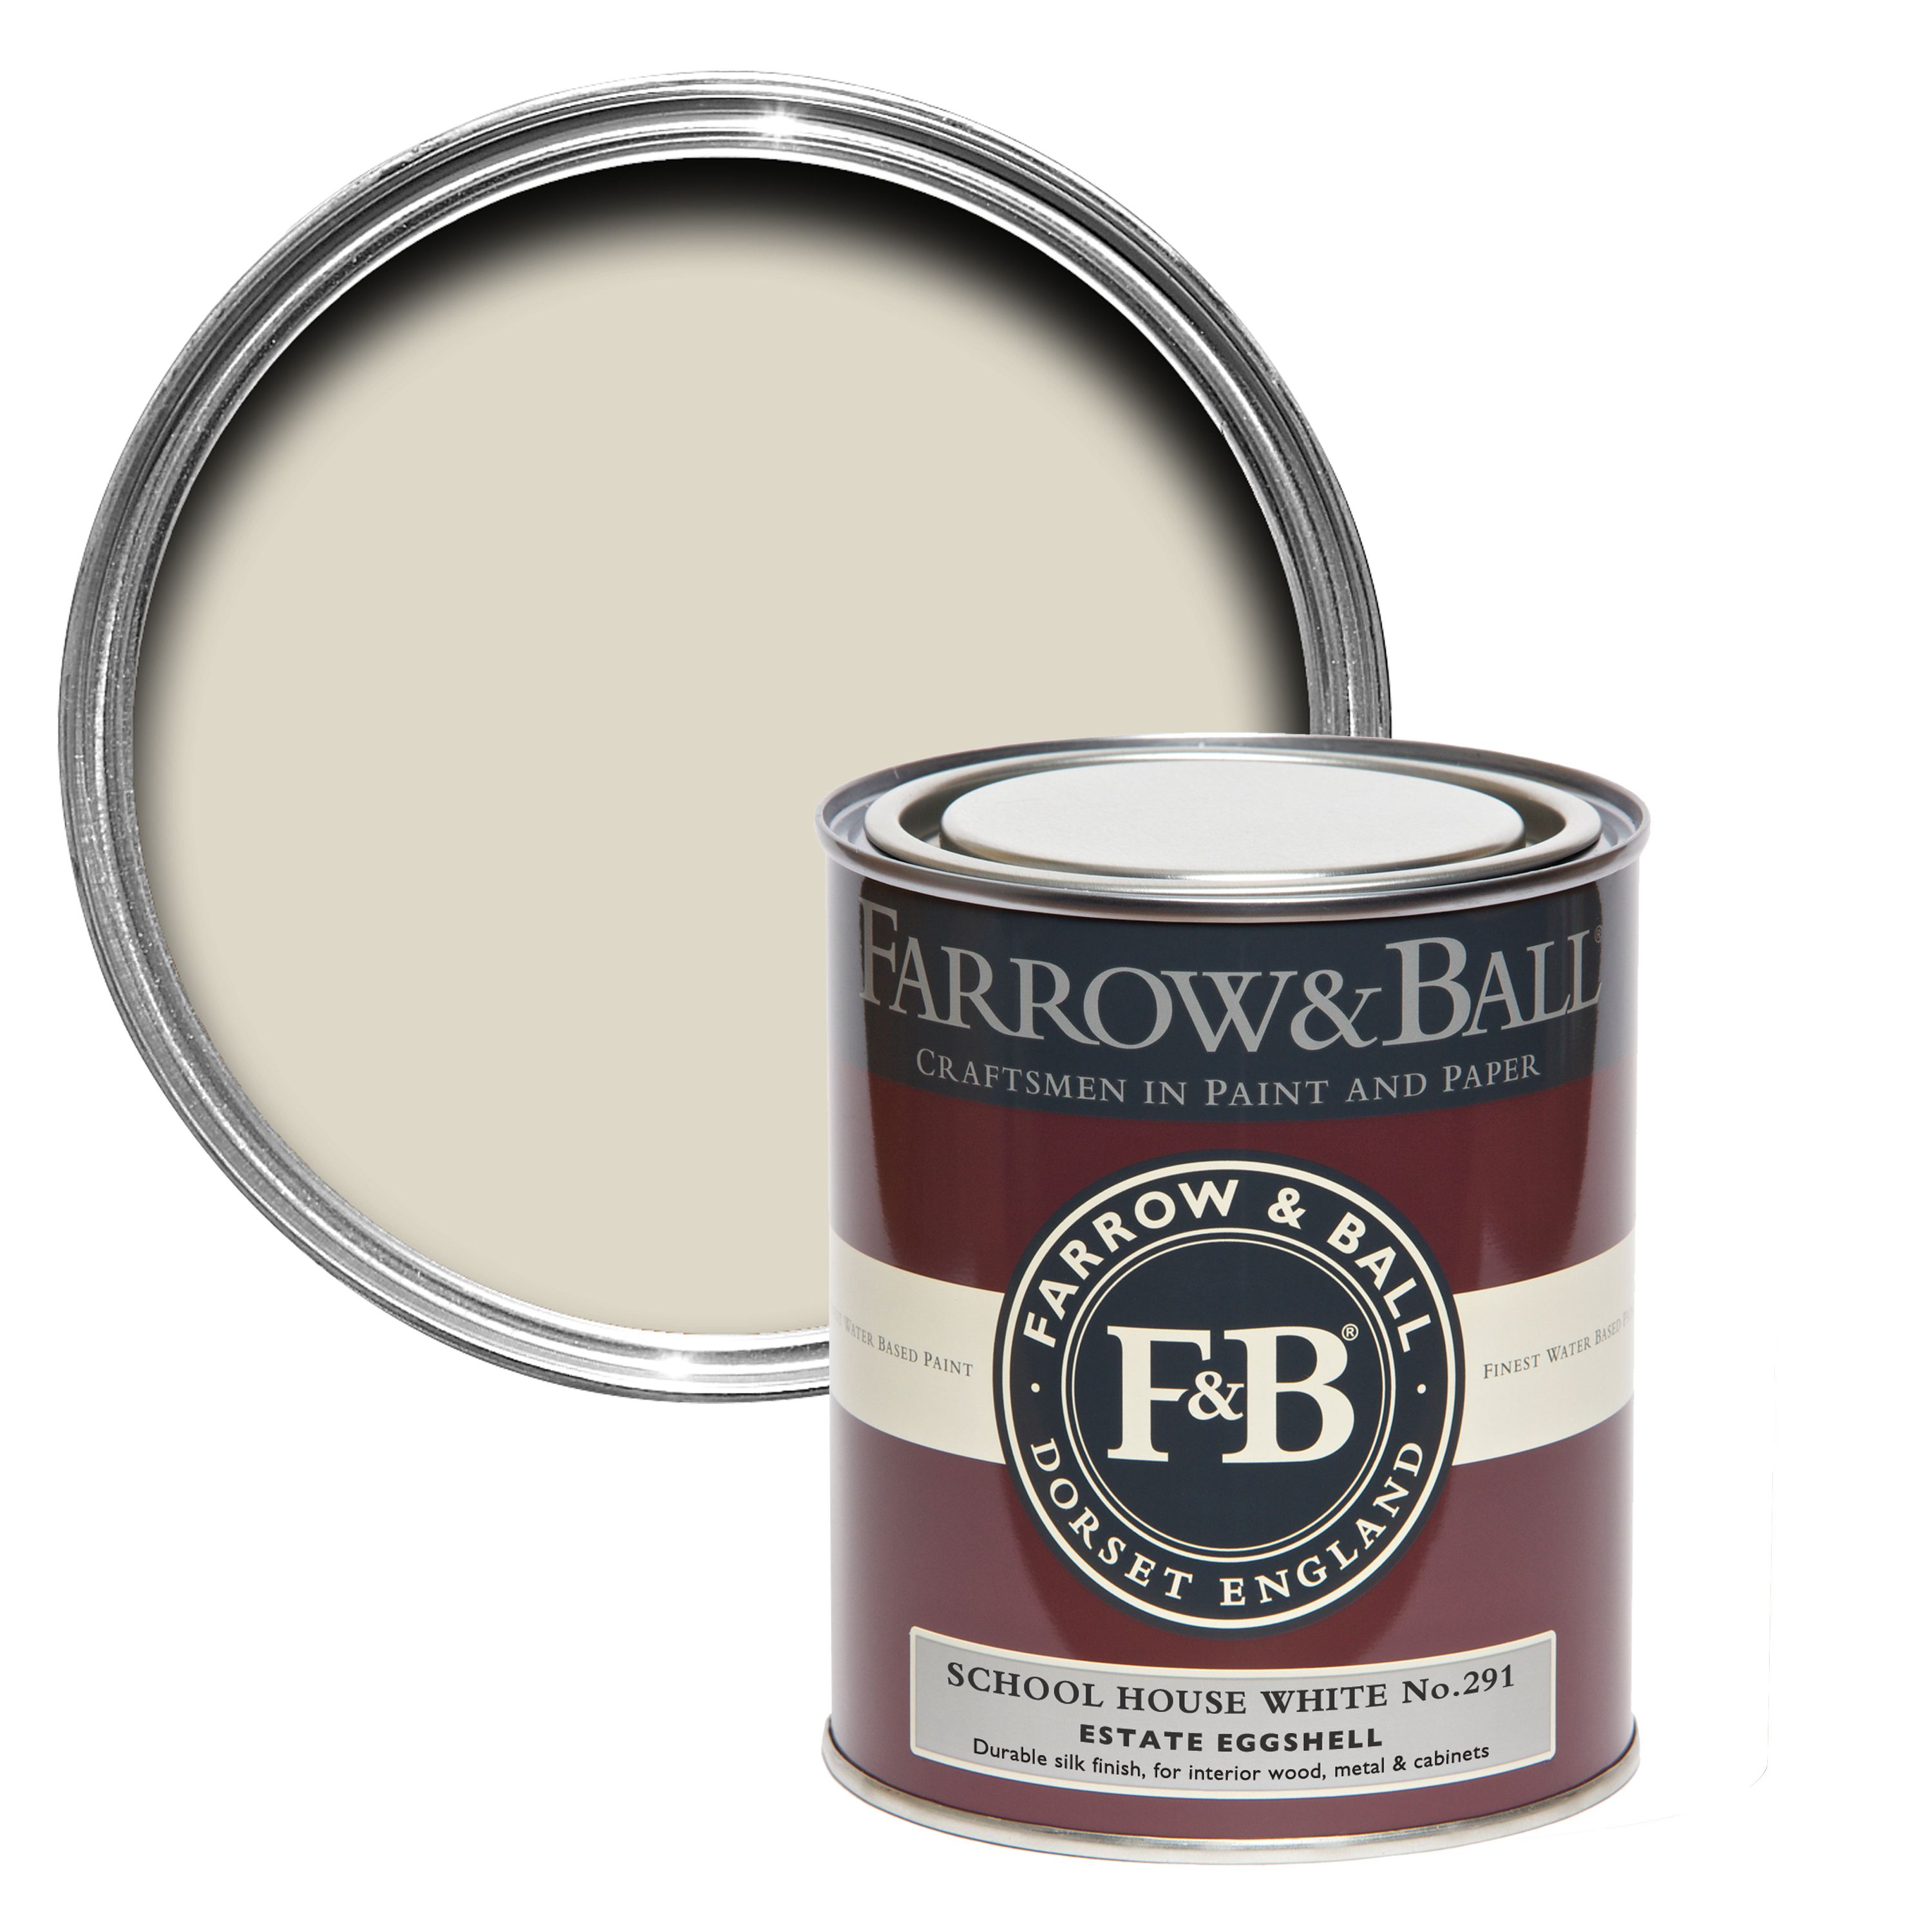 Farrow & Ball Estate School house white No.291 Eggshell Metal & wood paint, 750ml